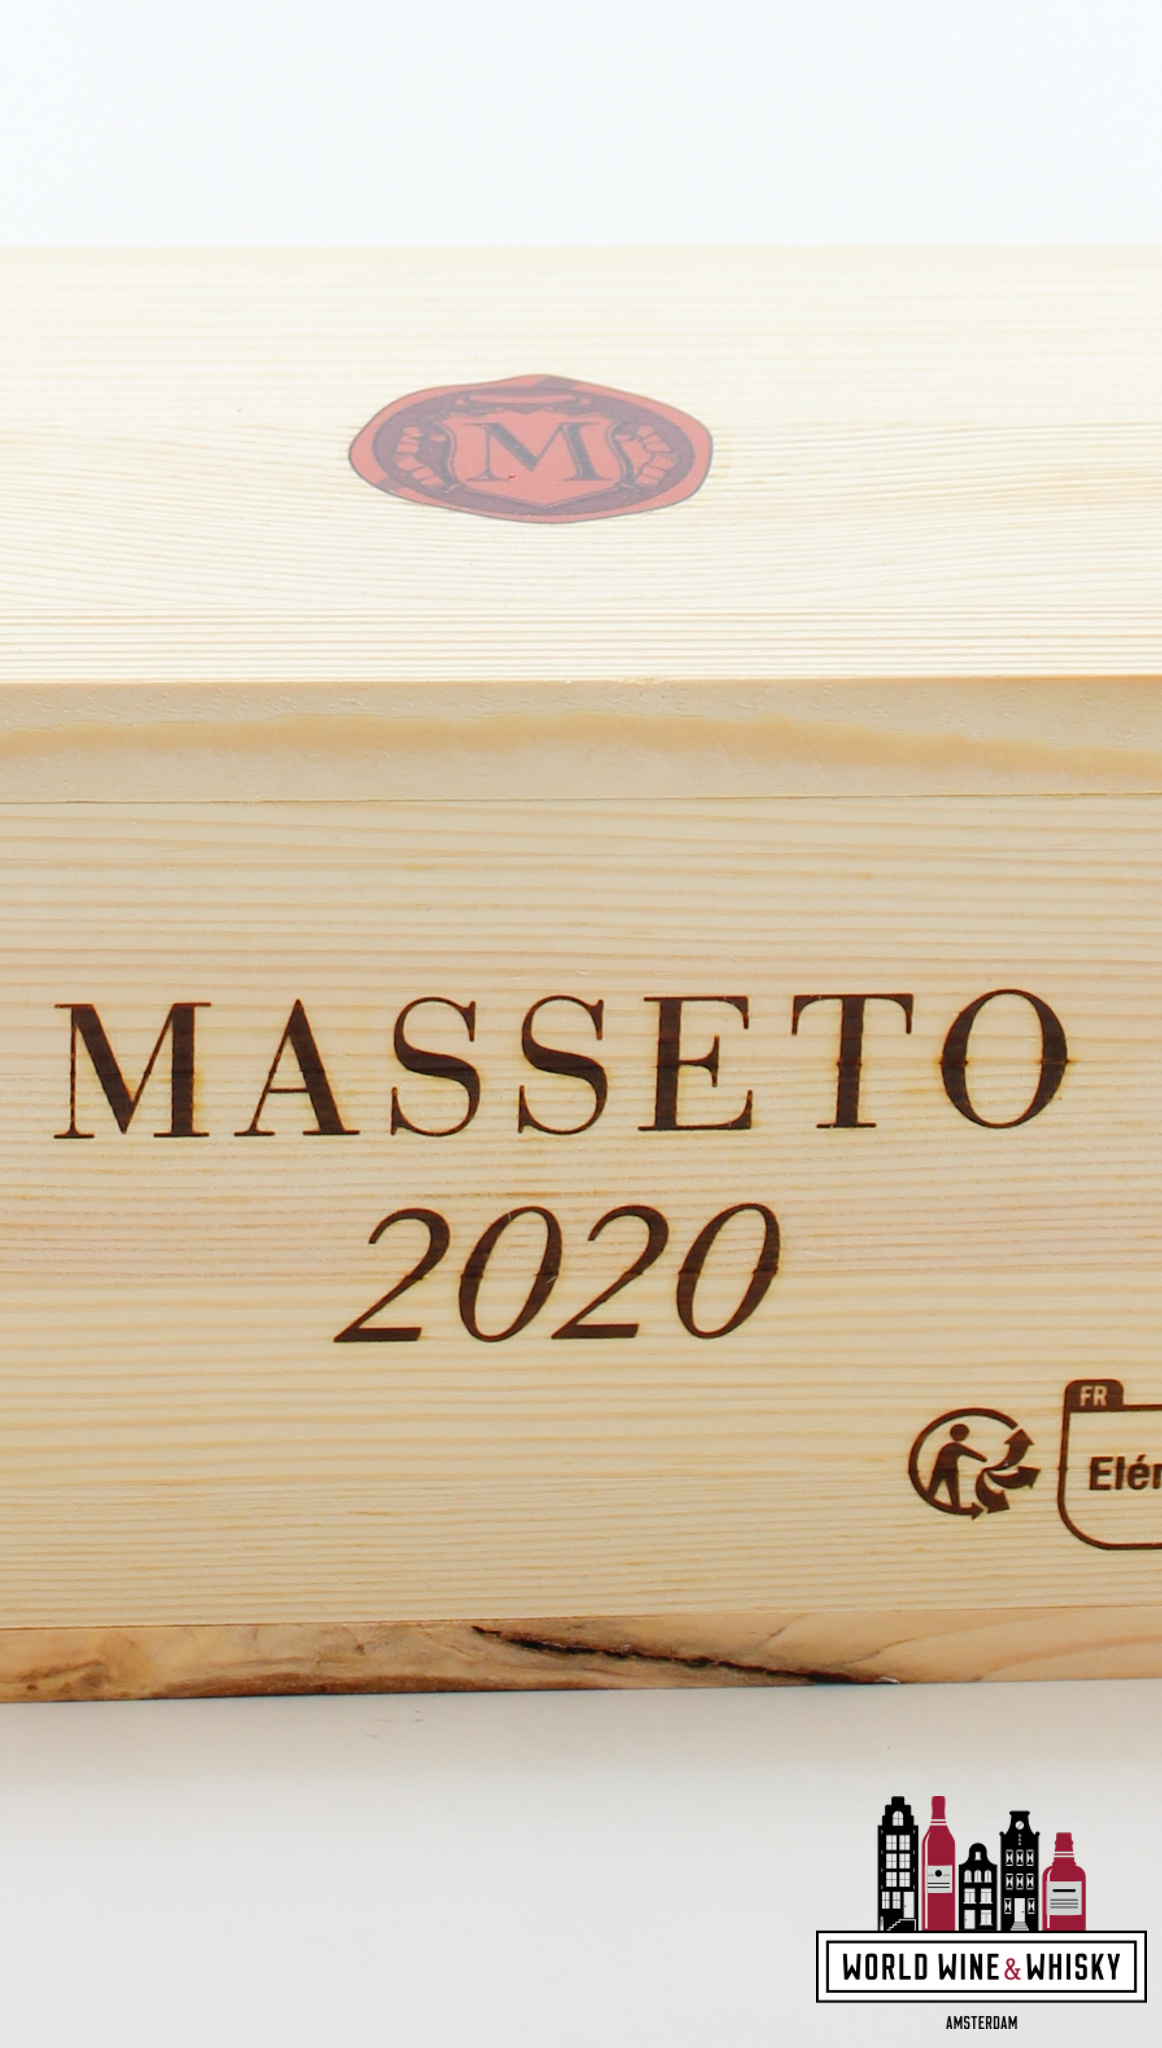 Masseto Masseto 2020 - Tenuta dell Ornellaia (1-bottle OWC)